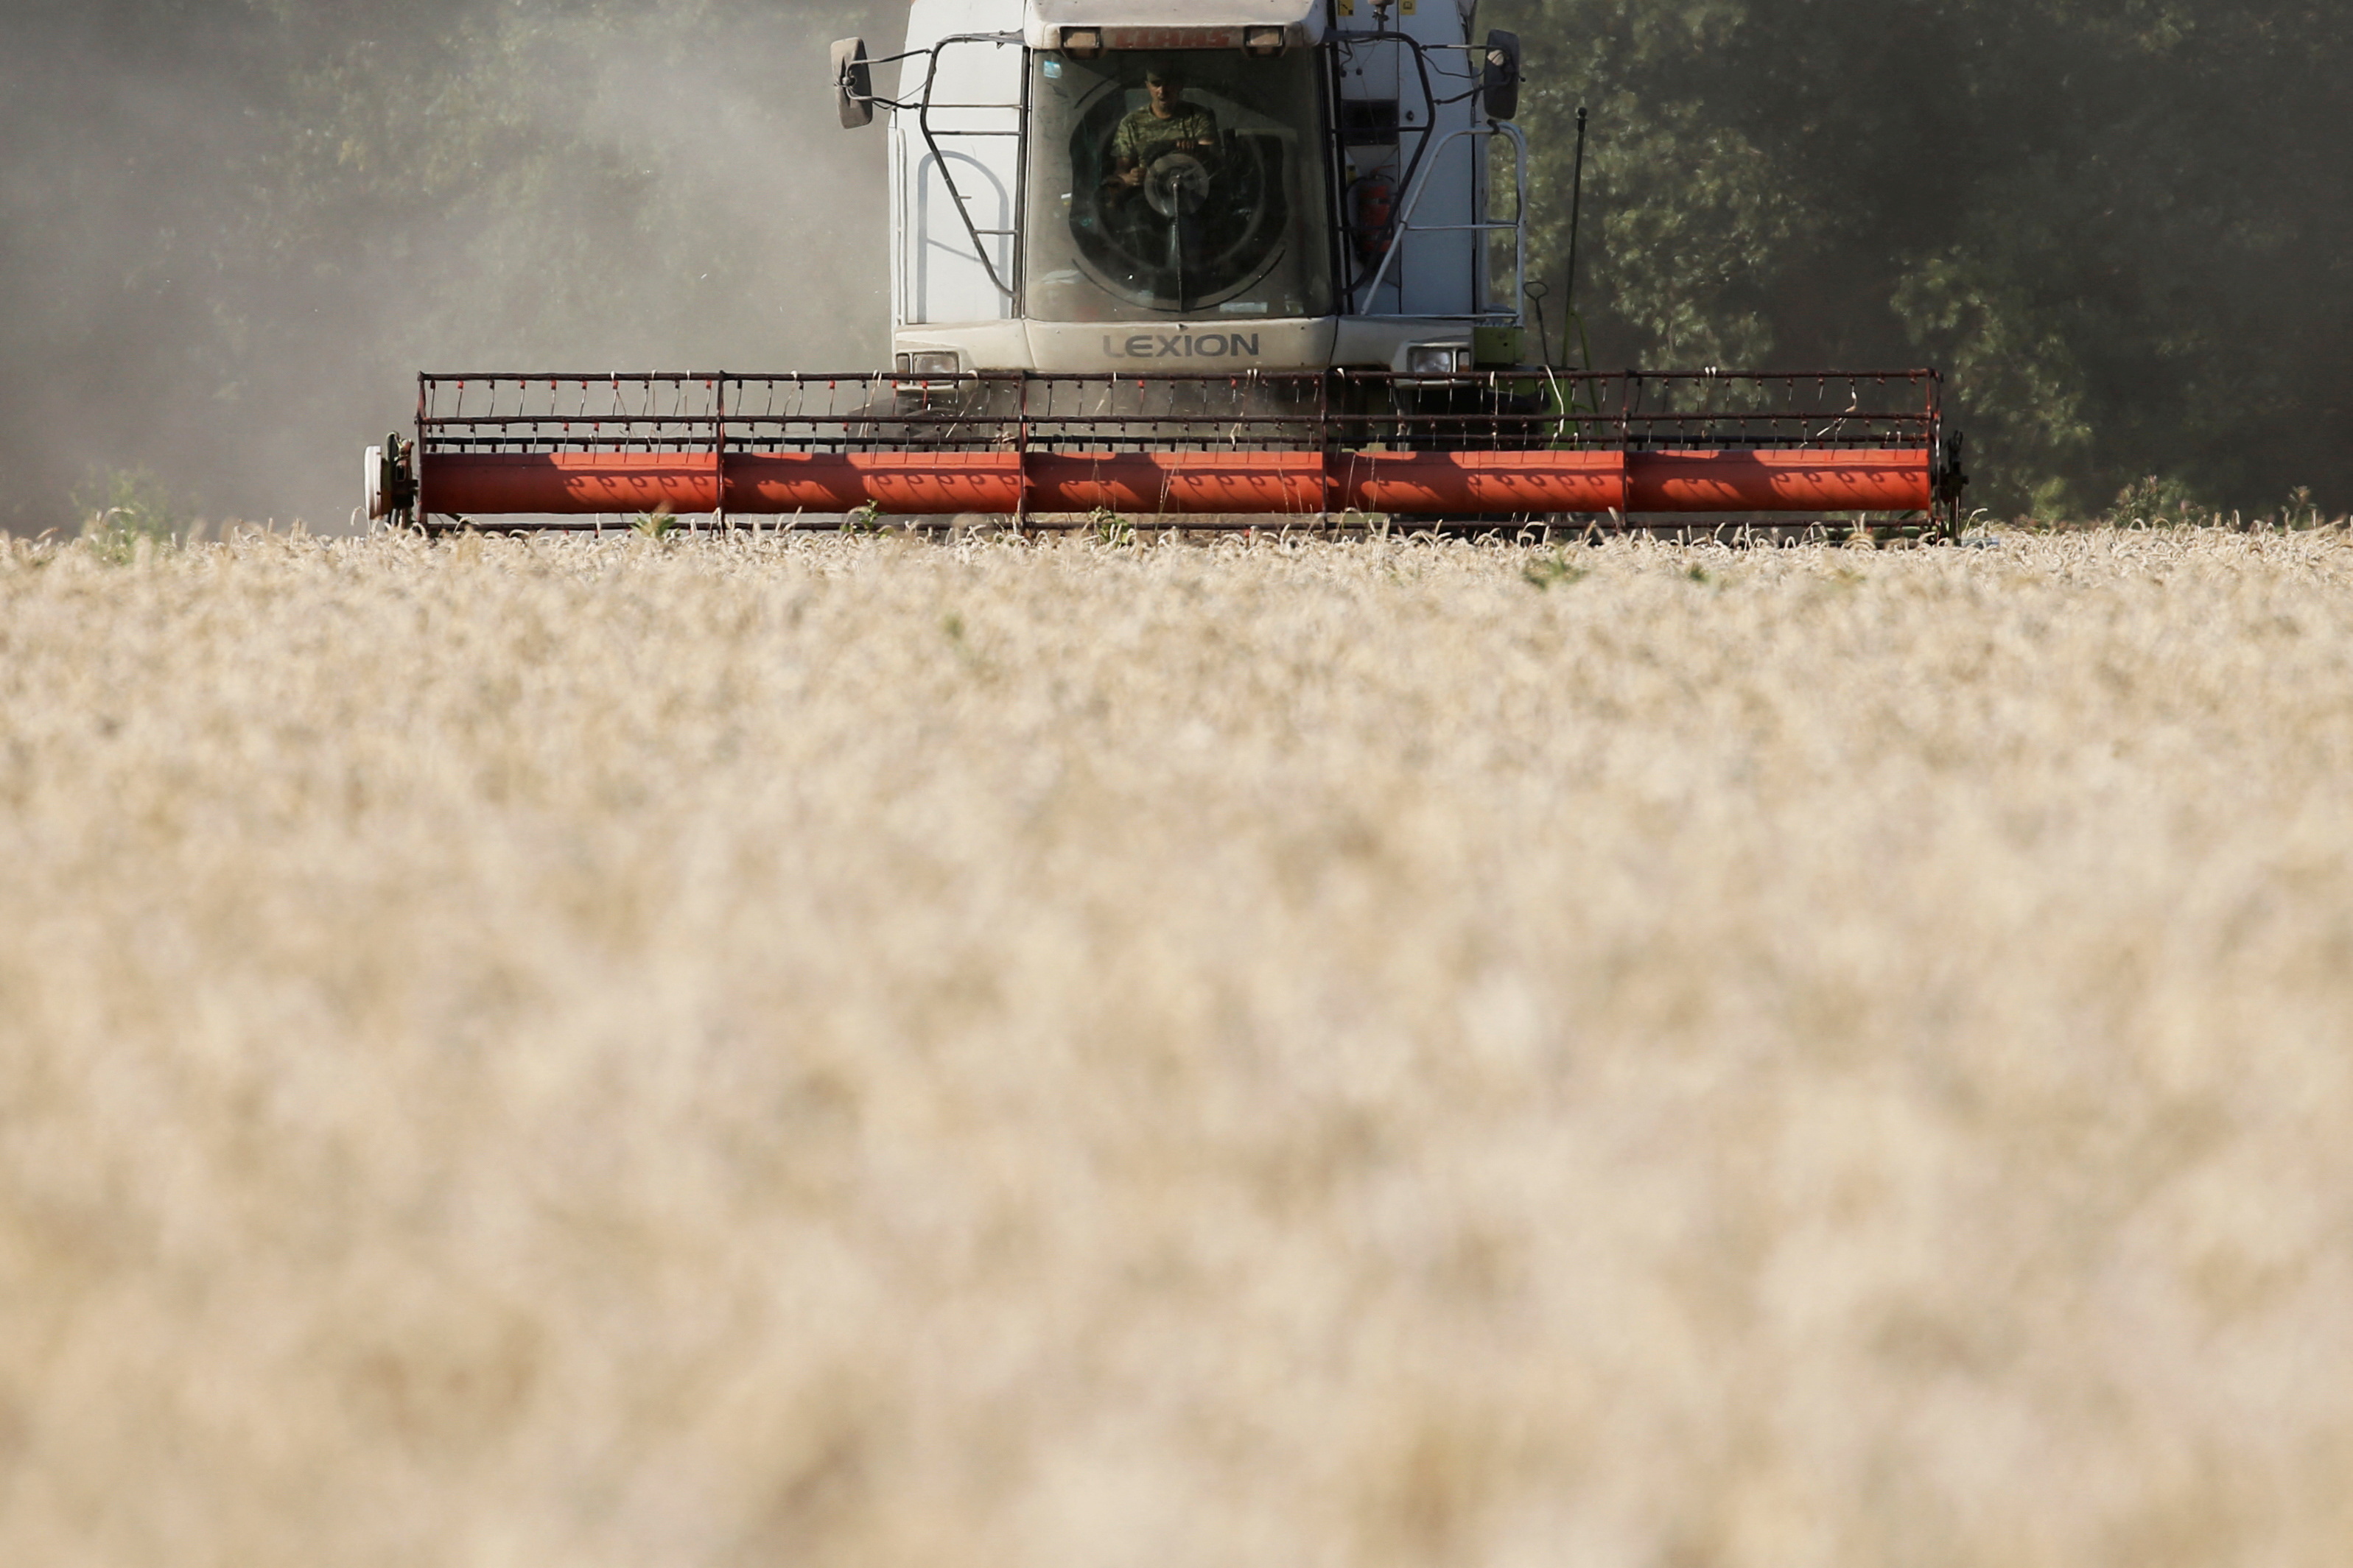 An employee operates a combine as he harvests wheat in a field in Kyiv region